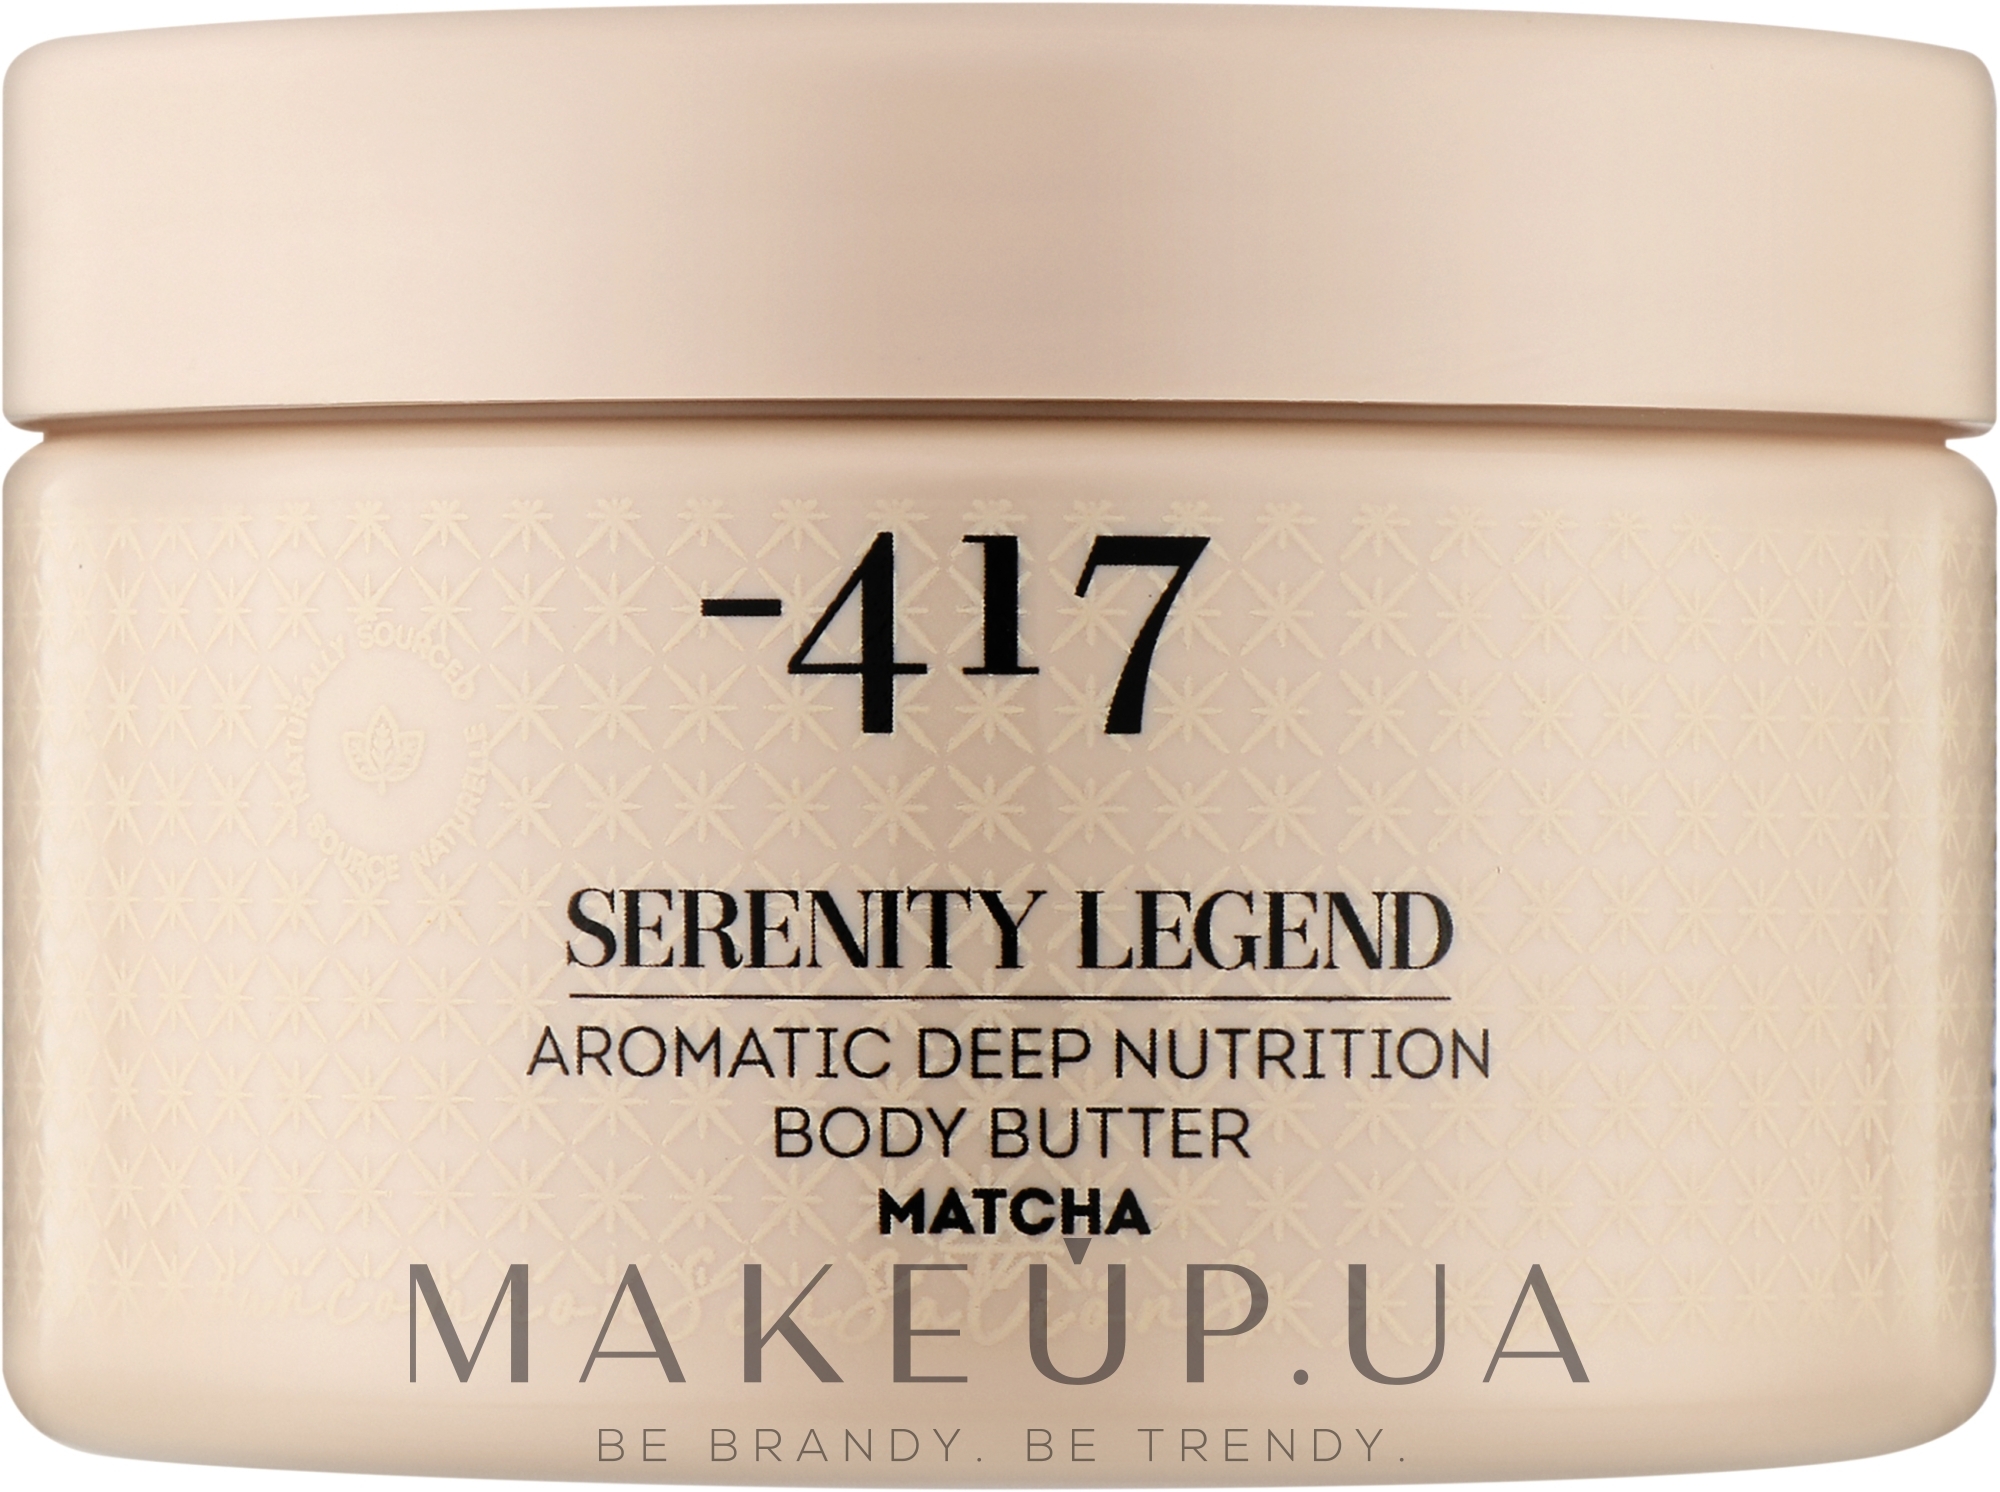 Крем-масло для глубокого питания кожи тела "Матча" - - 417 Serenity Legend Aromatic Deep Nutrition Body Butter Matcha — фото 250ml